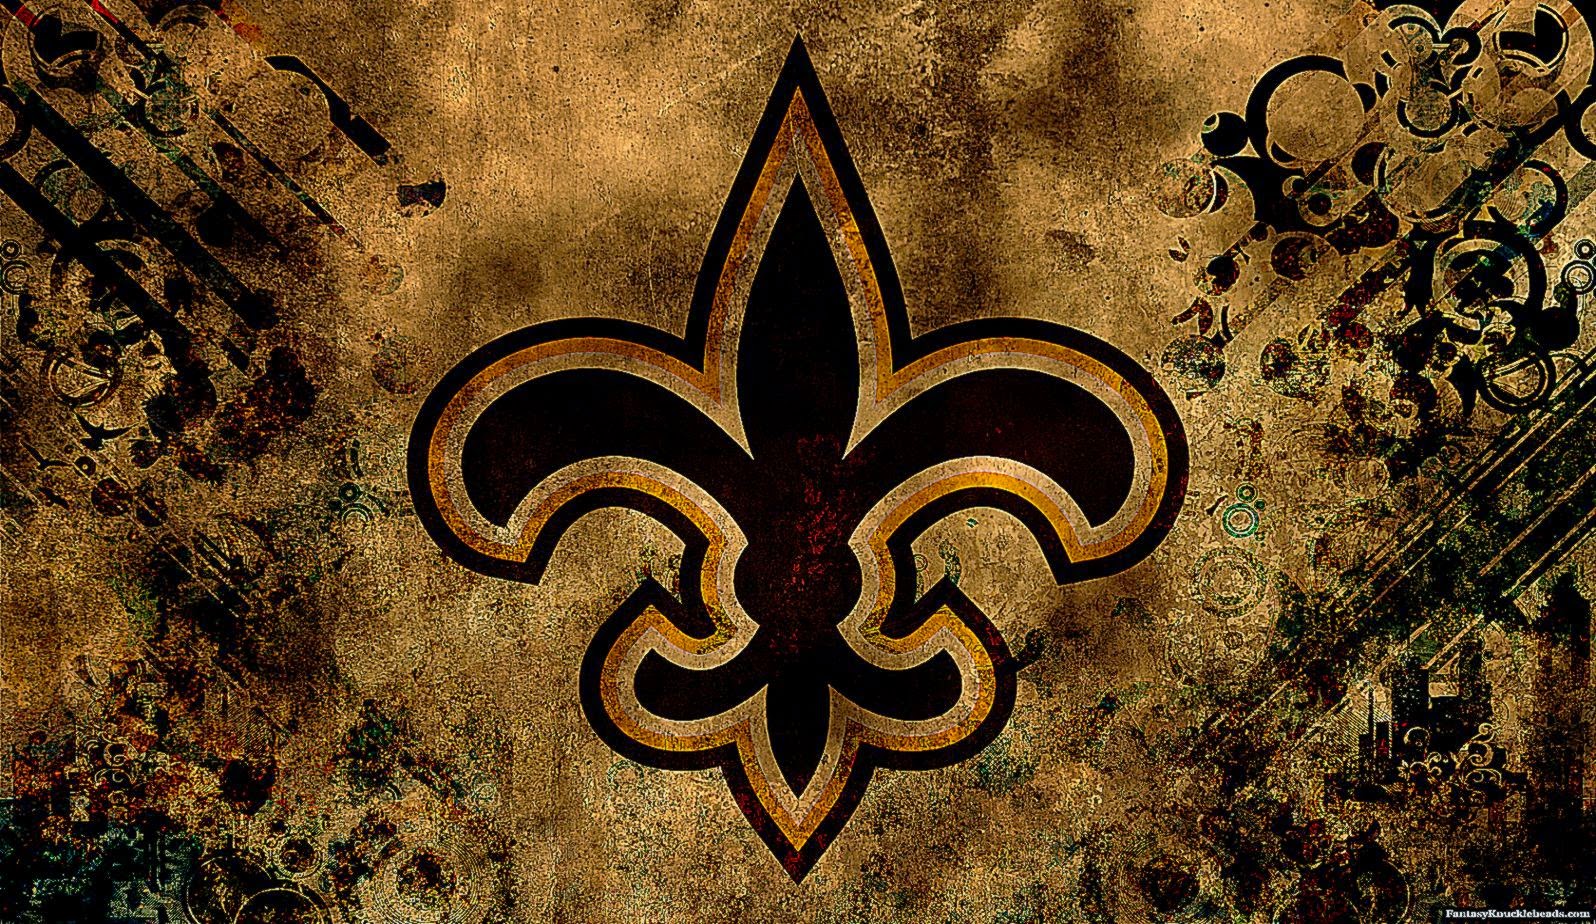 New Orleans Saints HD Image Wallpaper